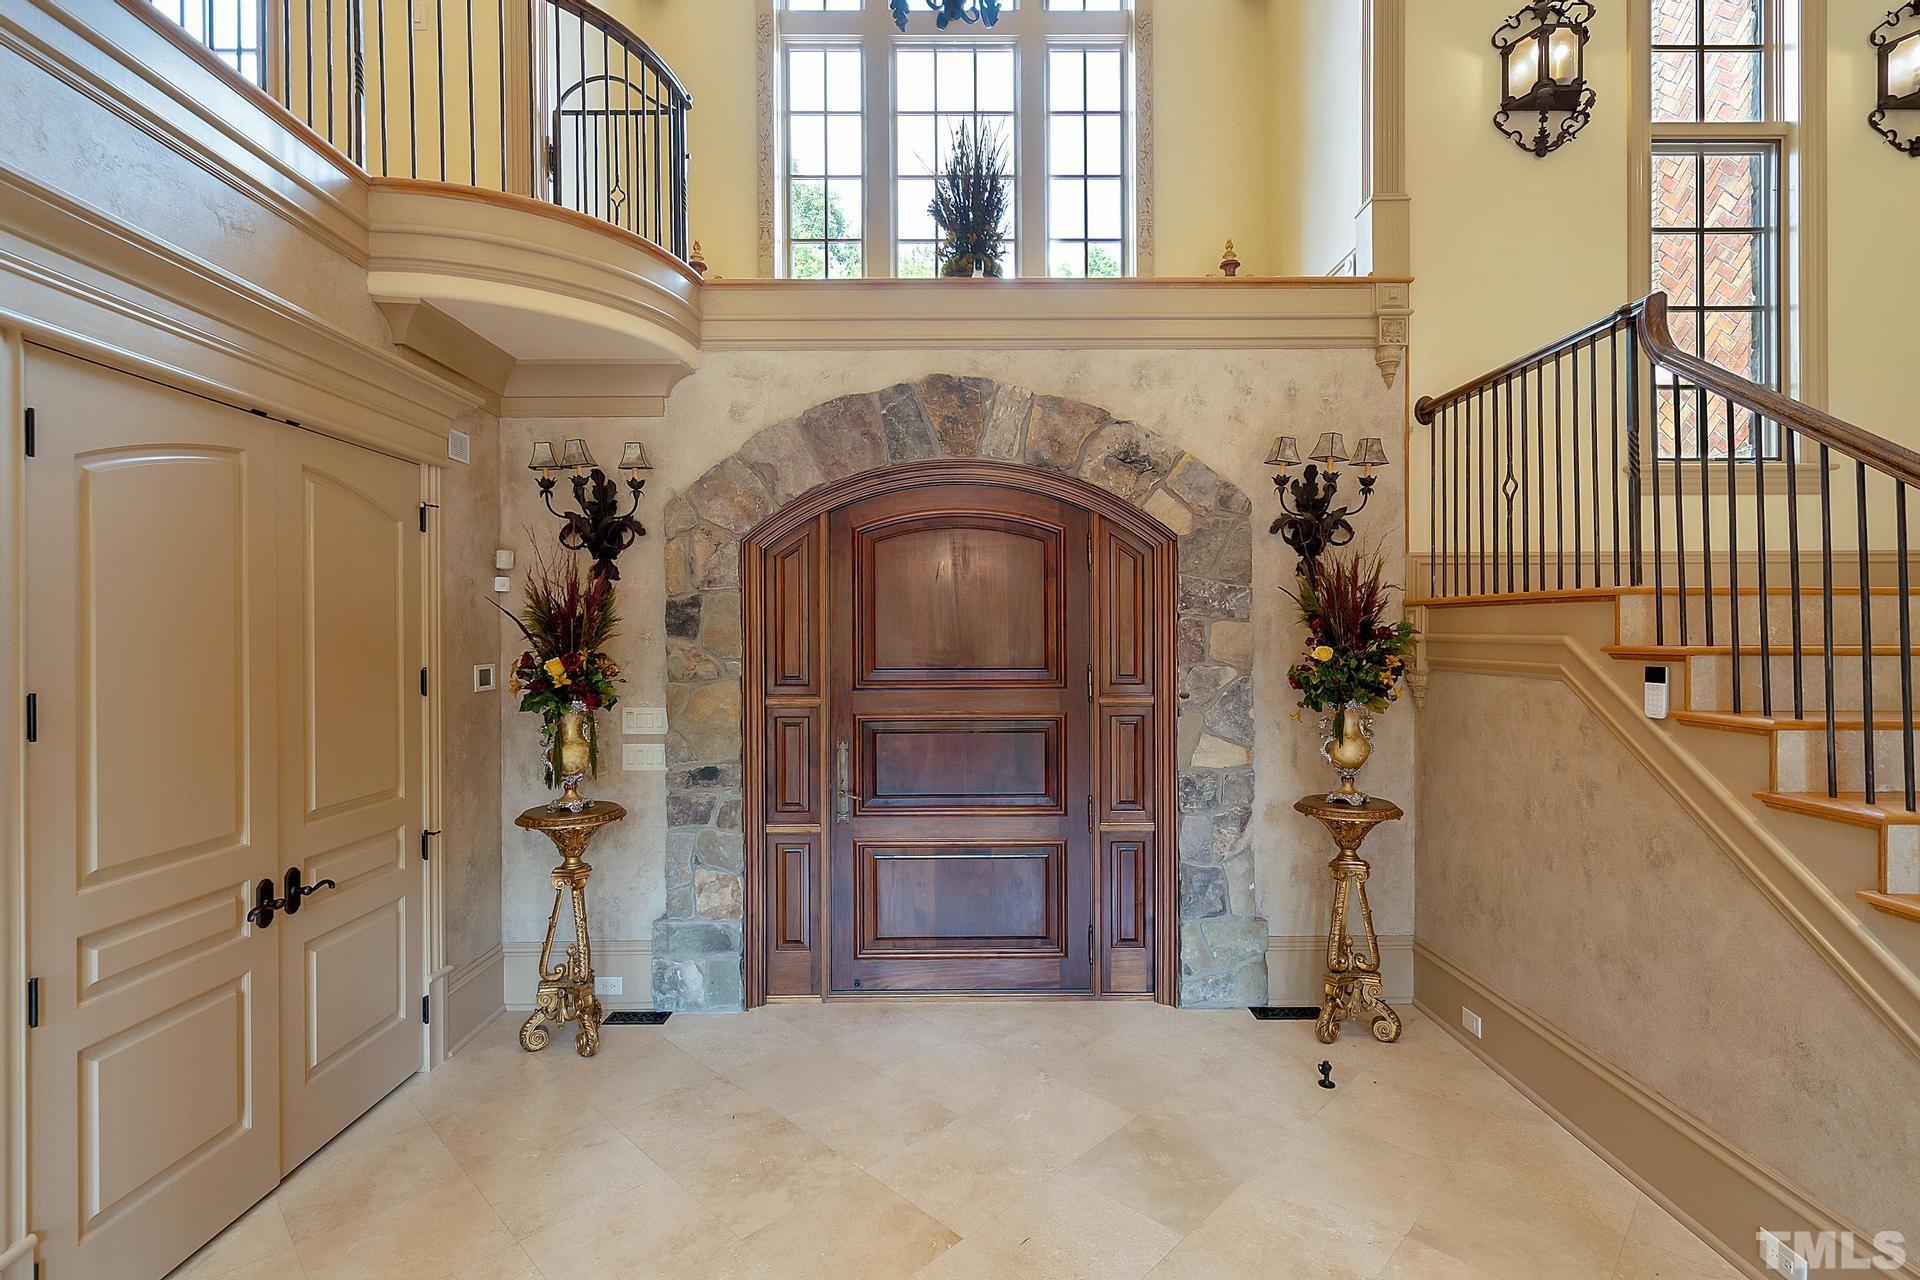 Grand Foyer Entry